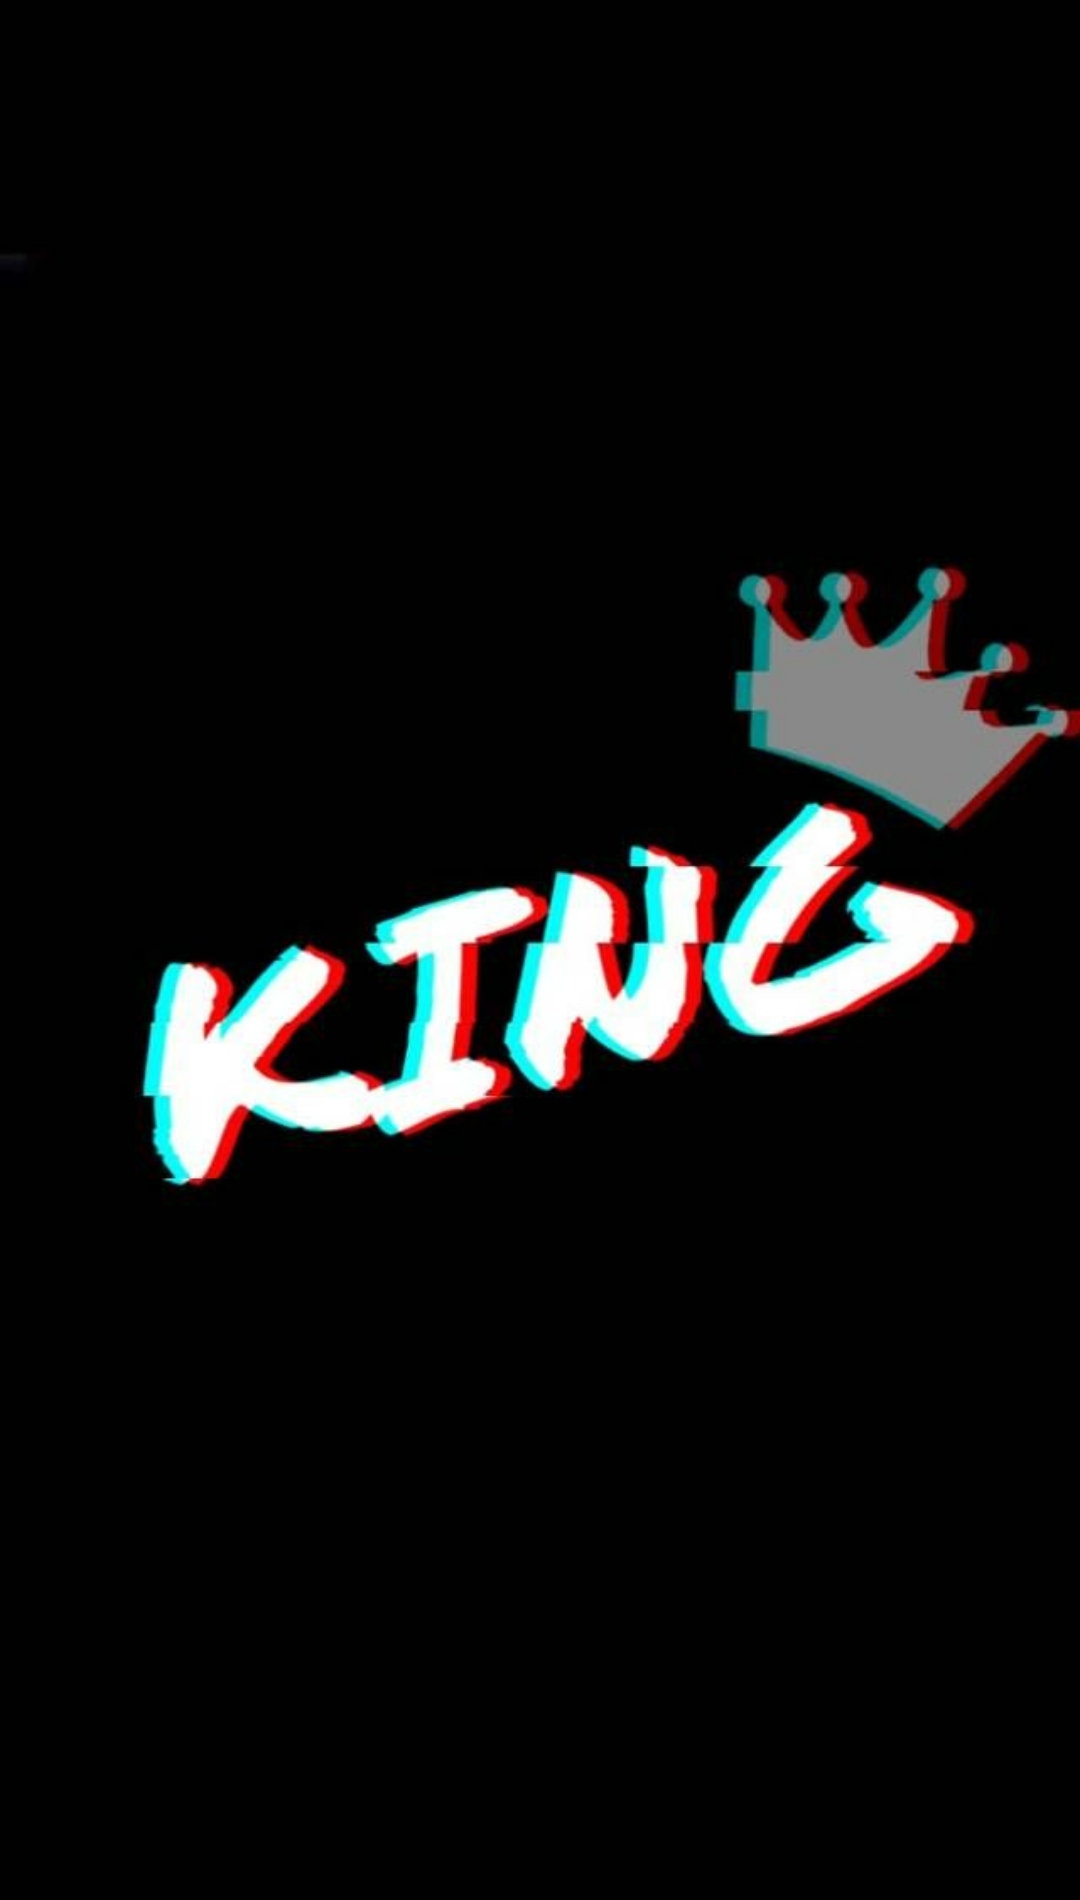 King Full HD Wallpaper